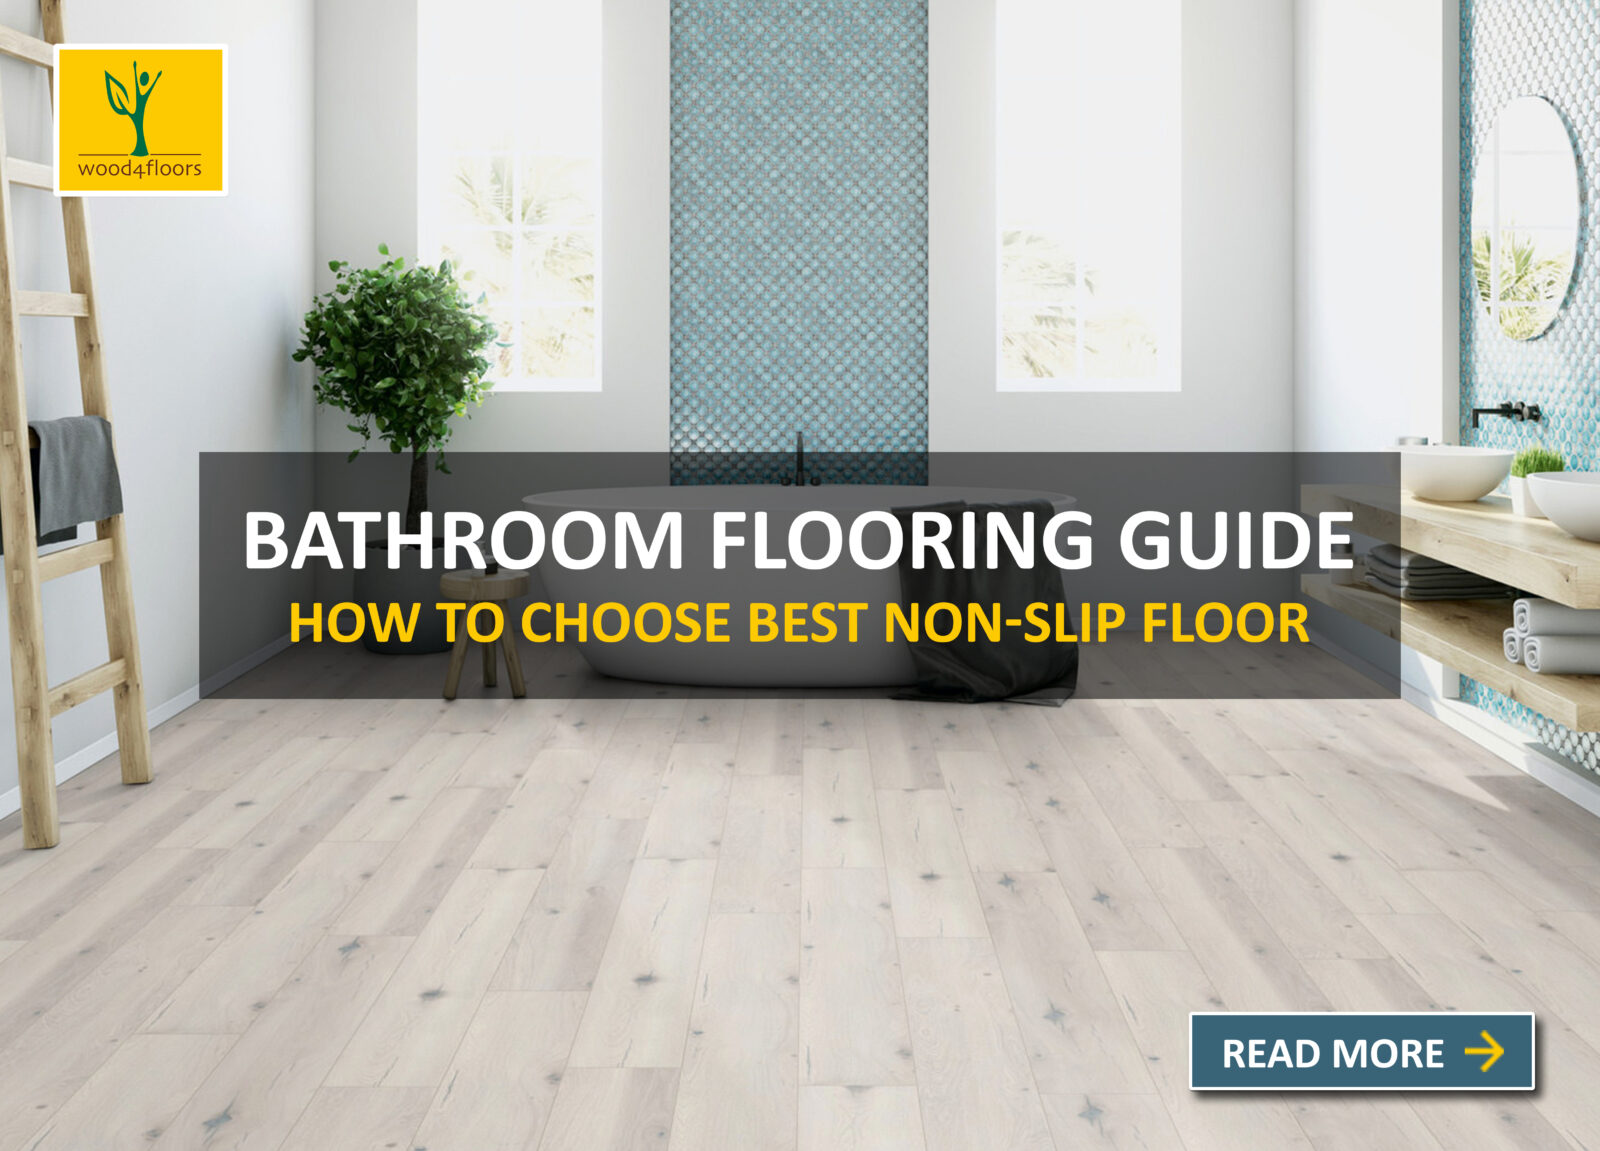 https://www.wood4floors.co.uk/wp-content/uploads/2021/07/Blog-Bathroom-Flooring-Guide-1600x1151.jpg